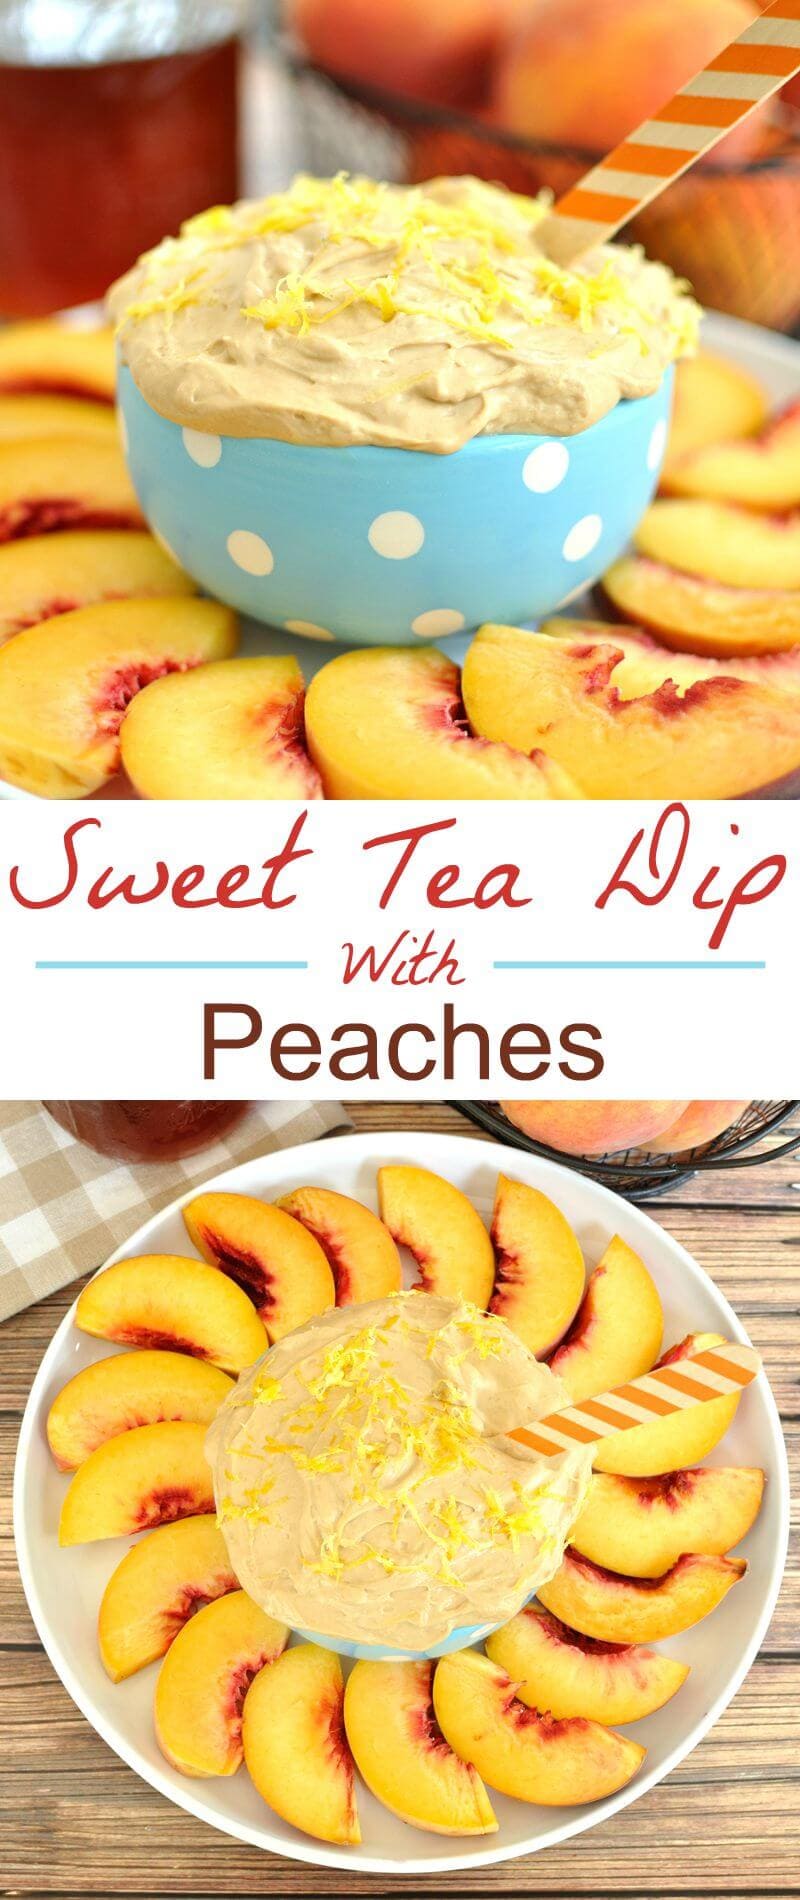 Sweet-Tea-Fruit-Dip-with-Peaches